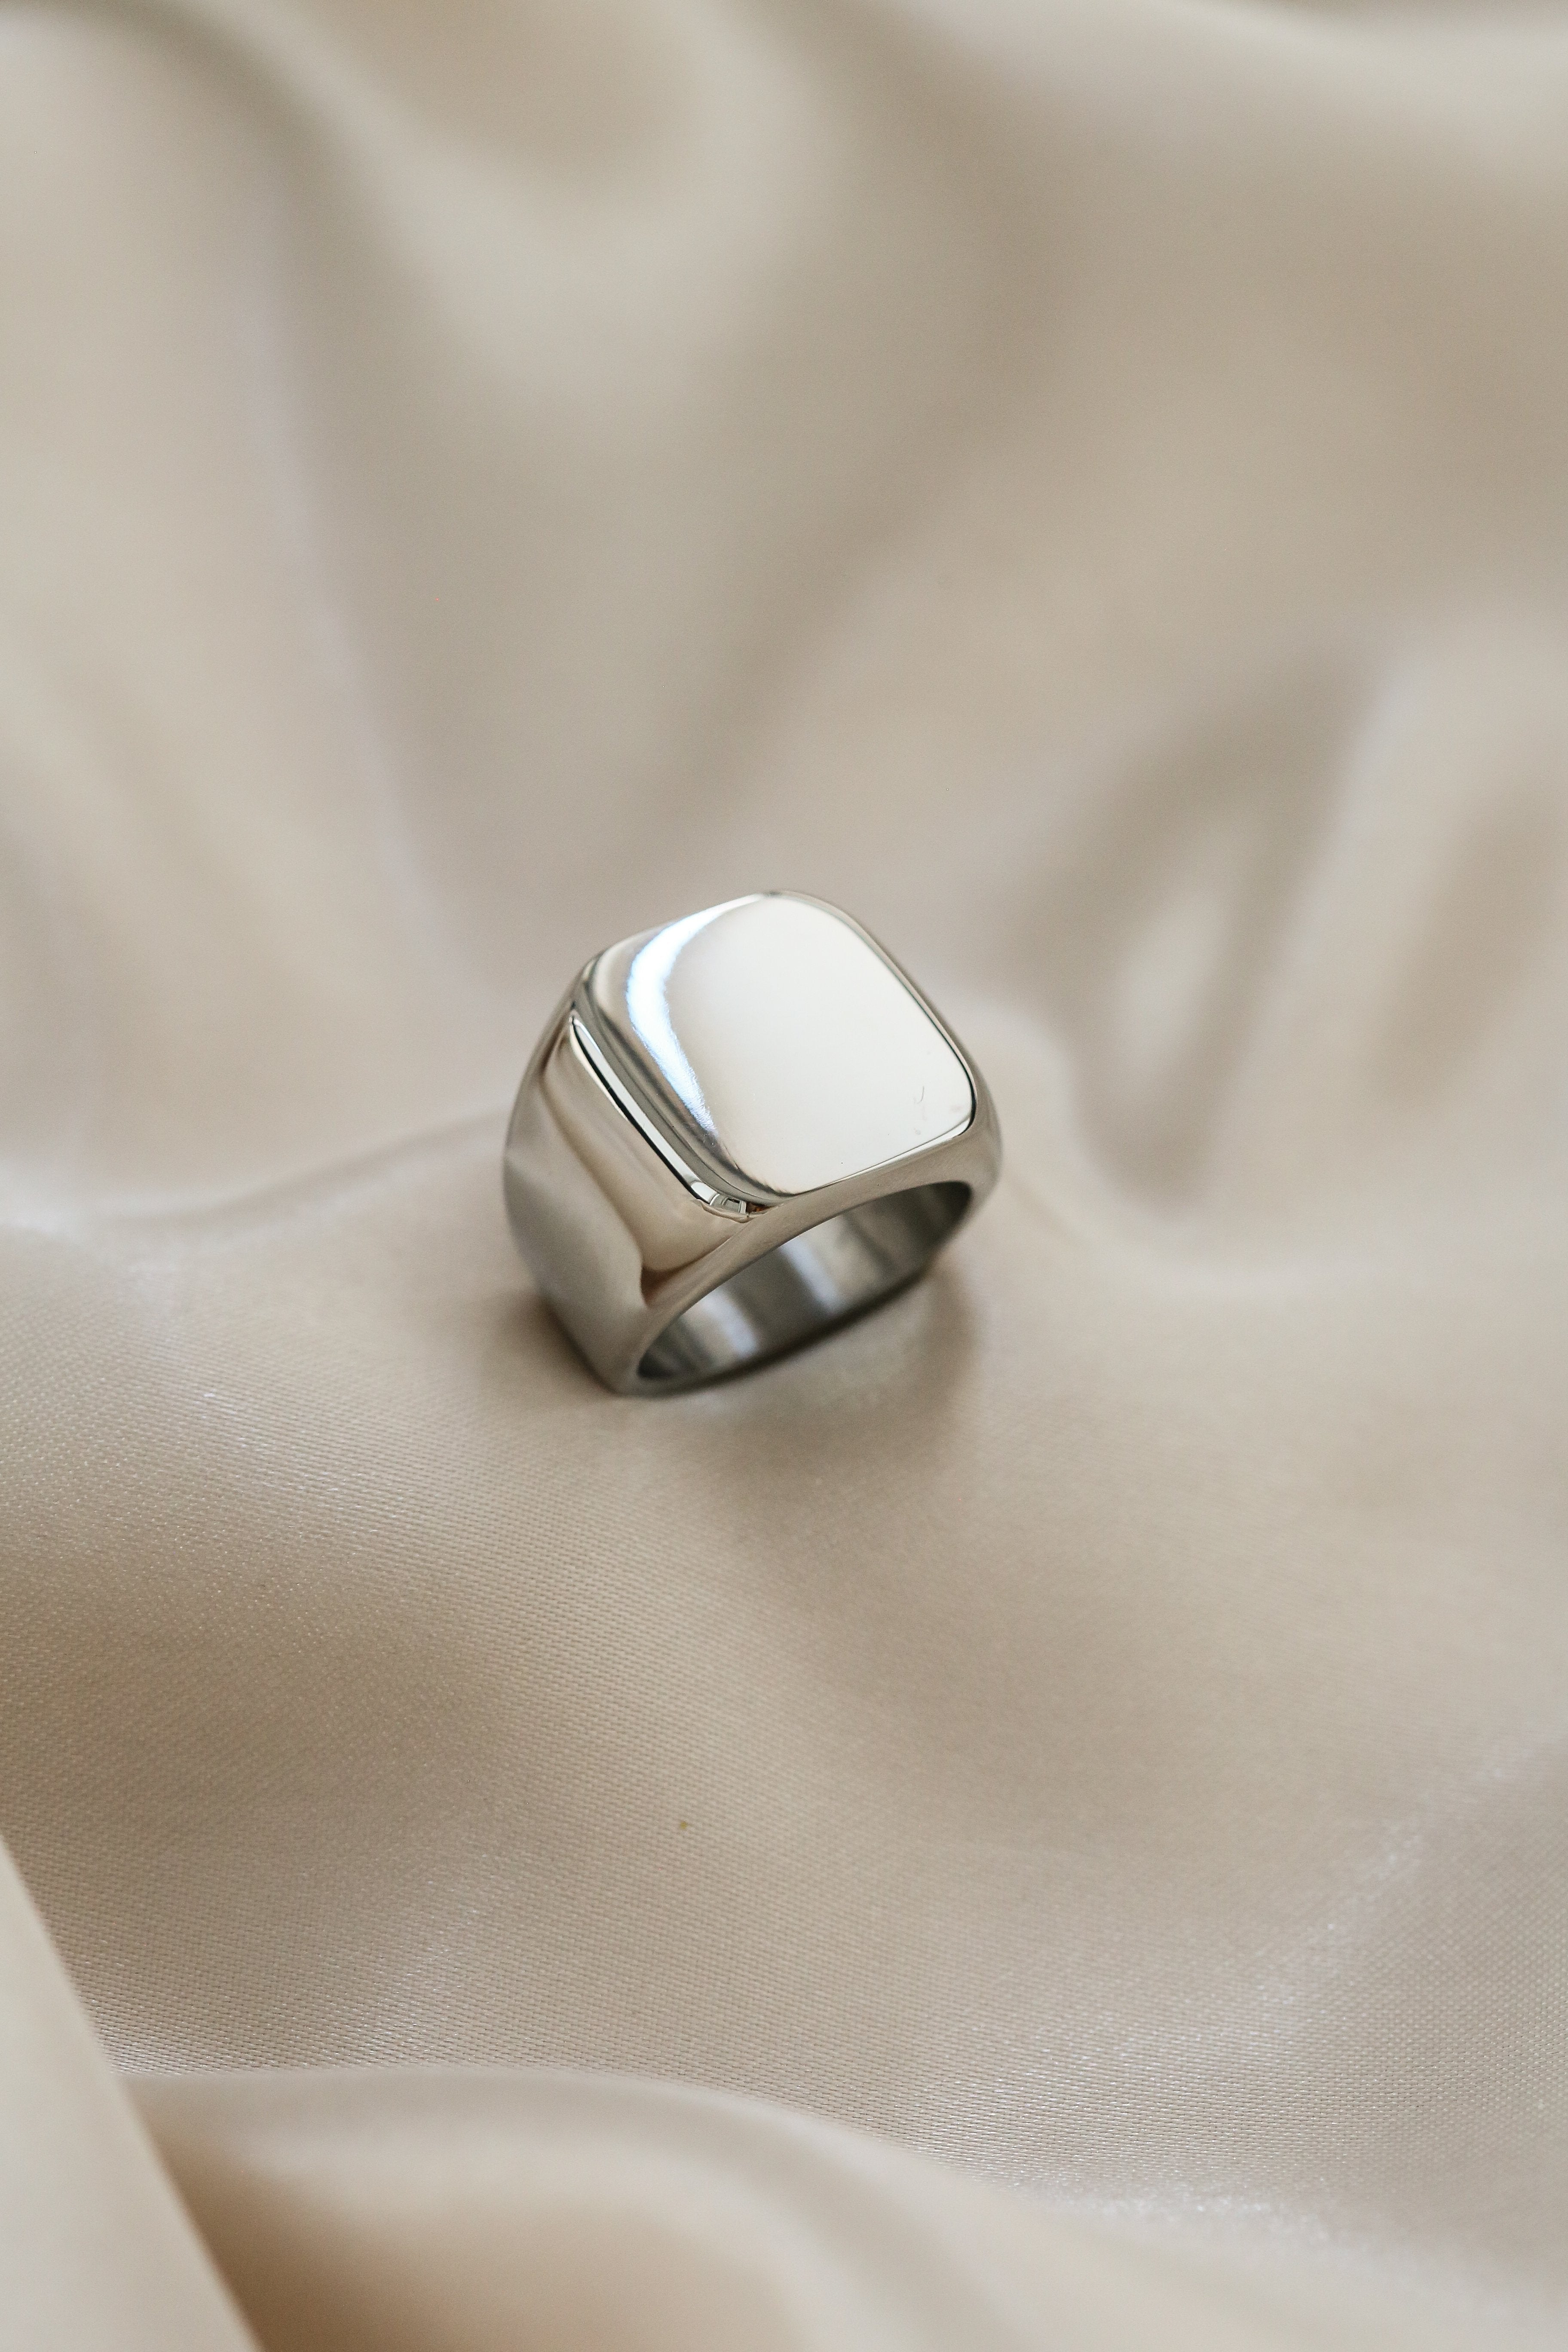 Eva Ring - Boutique Minimaliste has waterproof, durable, elegant and vintage inspired jewelry